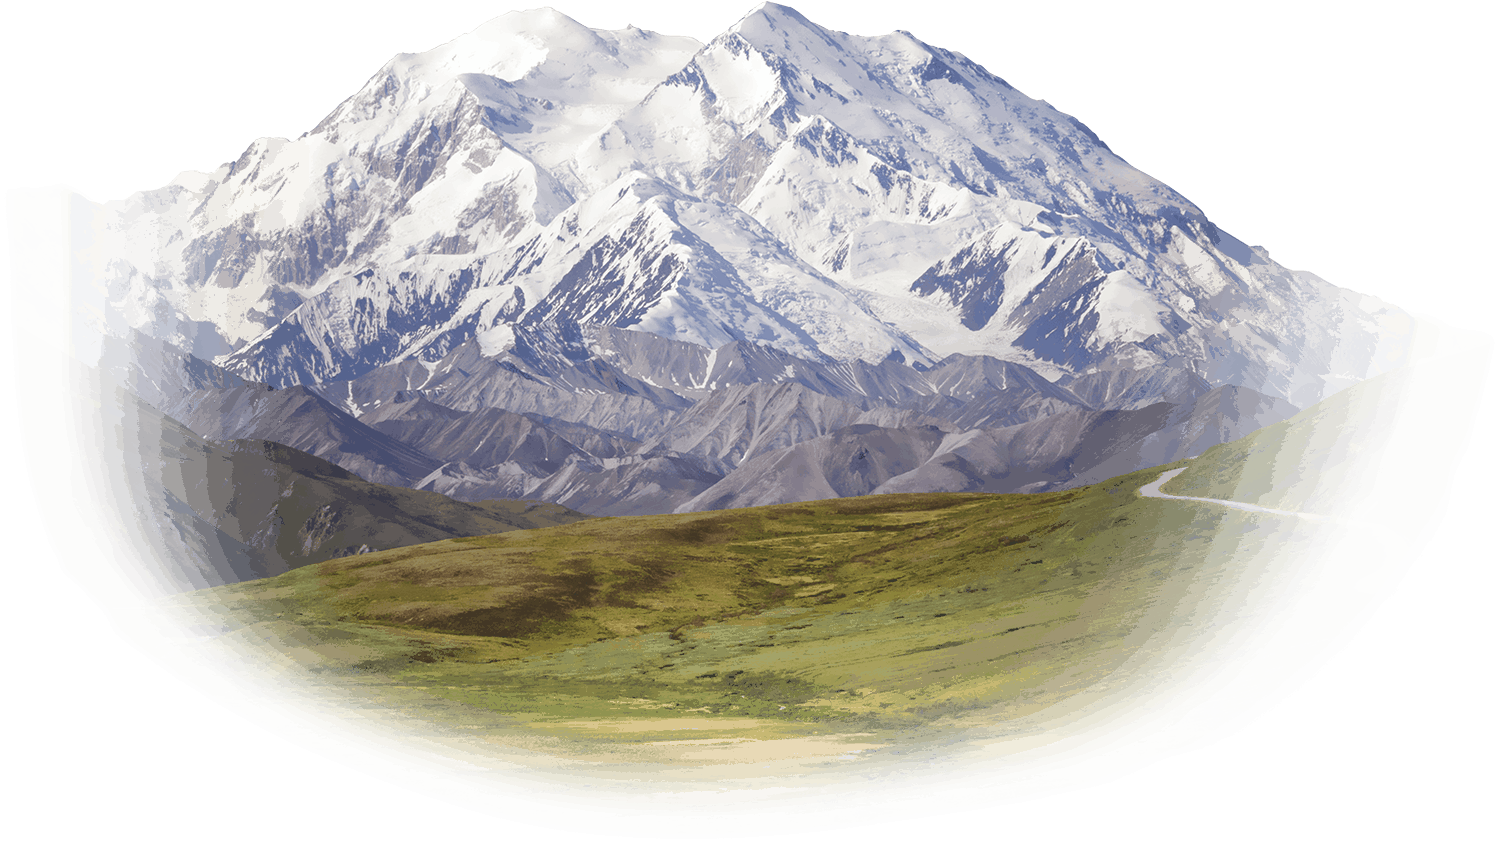 ESG image - beautiful snowcapped mountains